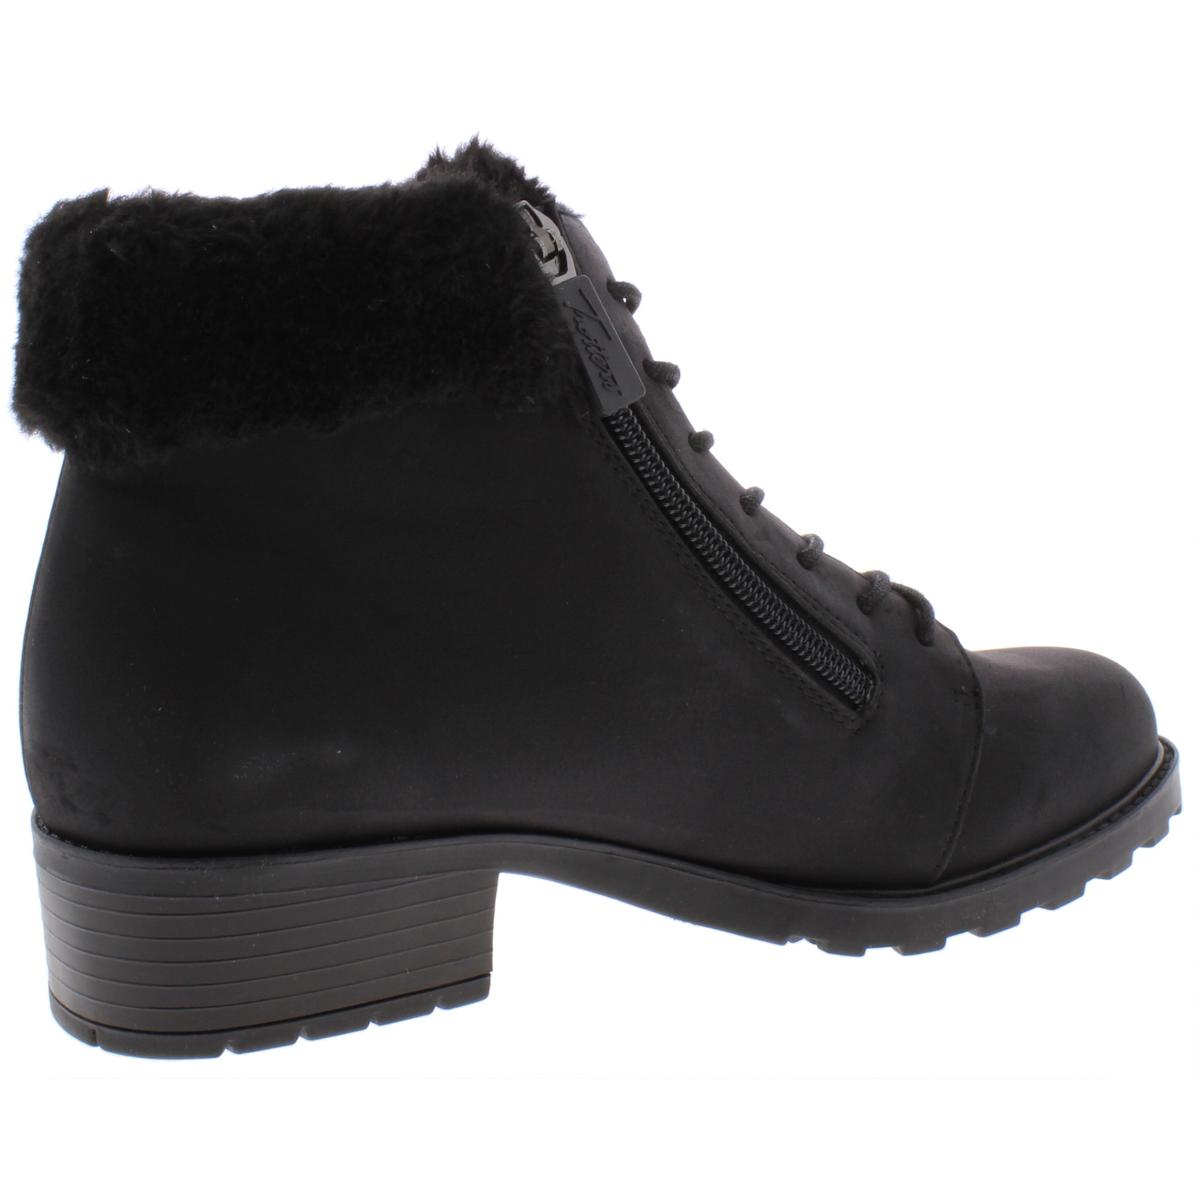 Trotters Womens Below Zero Black Winter Boots Shoes 7.5 Narrow (AA,N ...